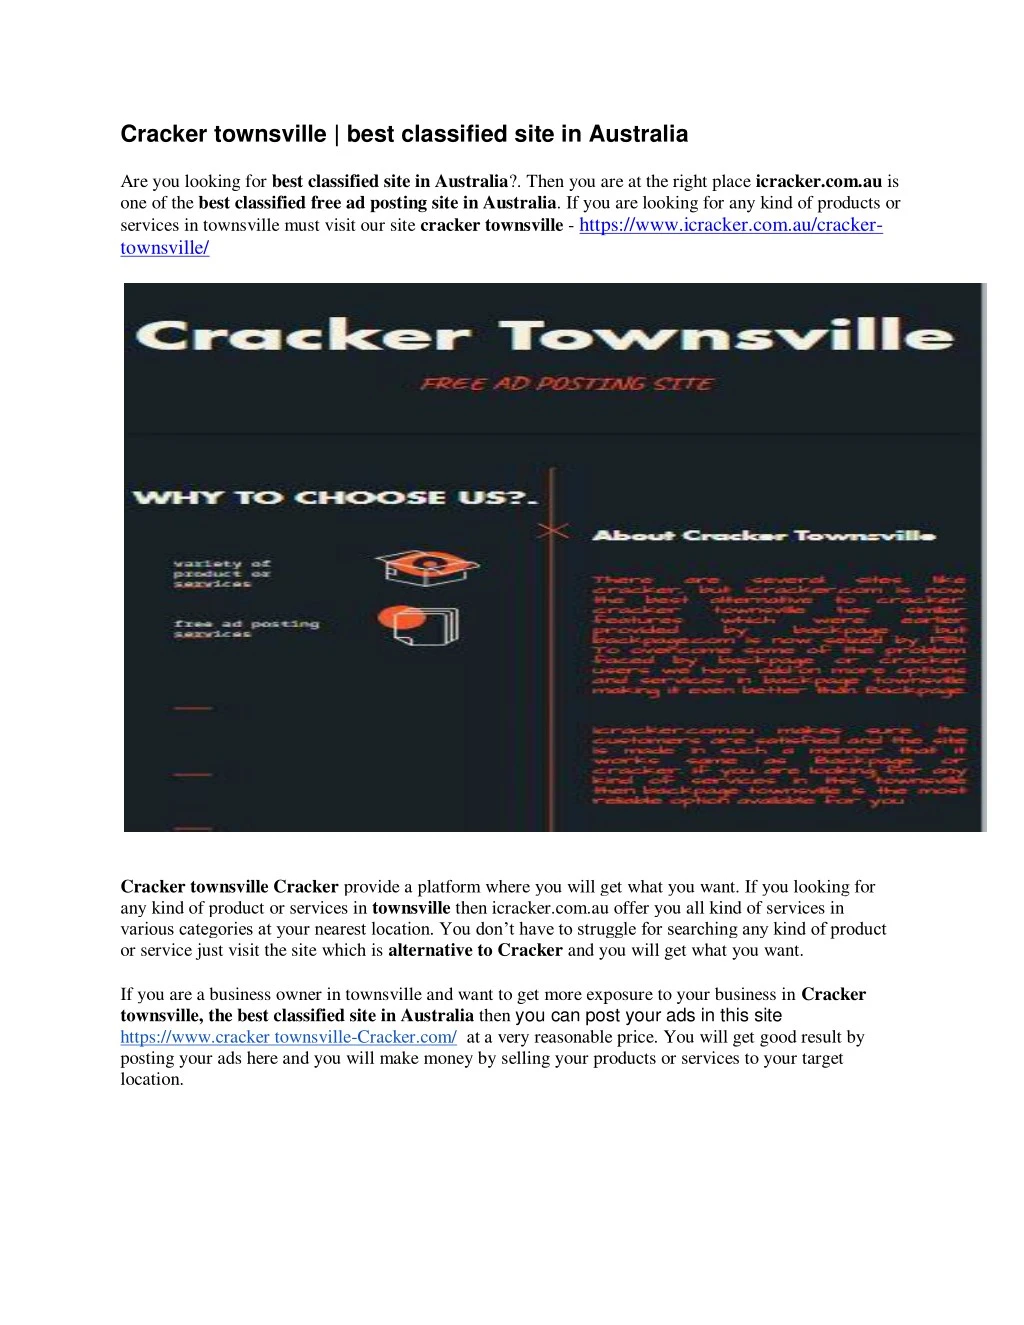 cracker townsville best classified site